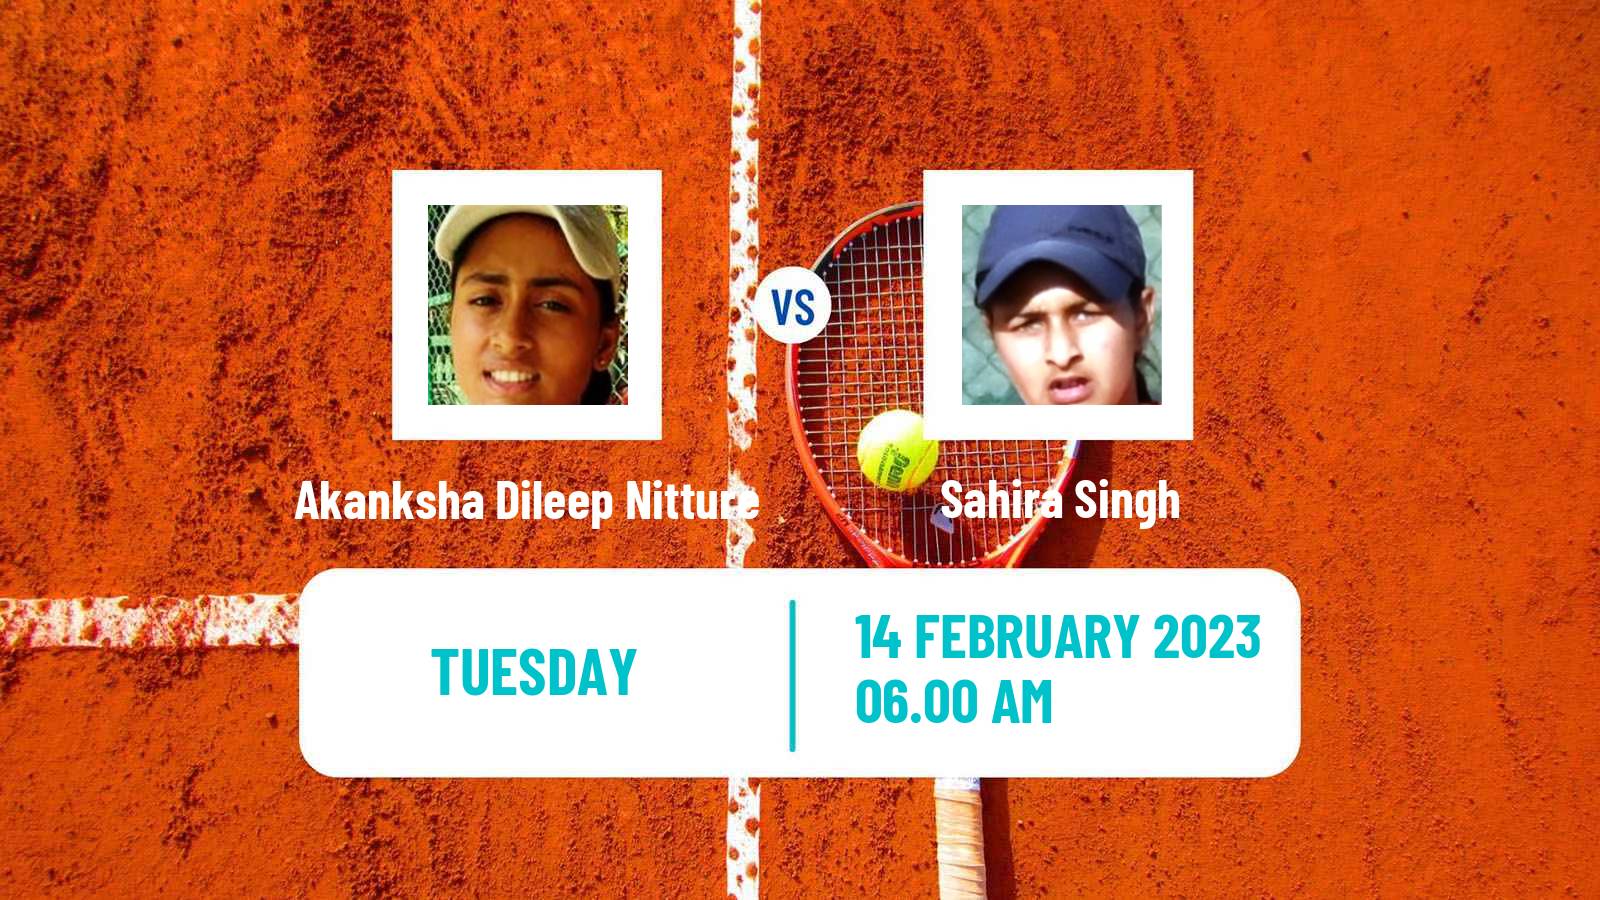 Tennis ITF Tournaments Akanksha Dileep Nitture - Sahira Singh